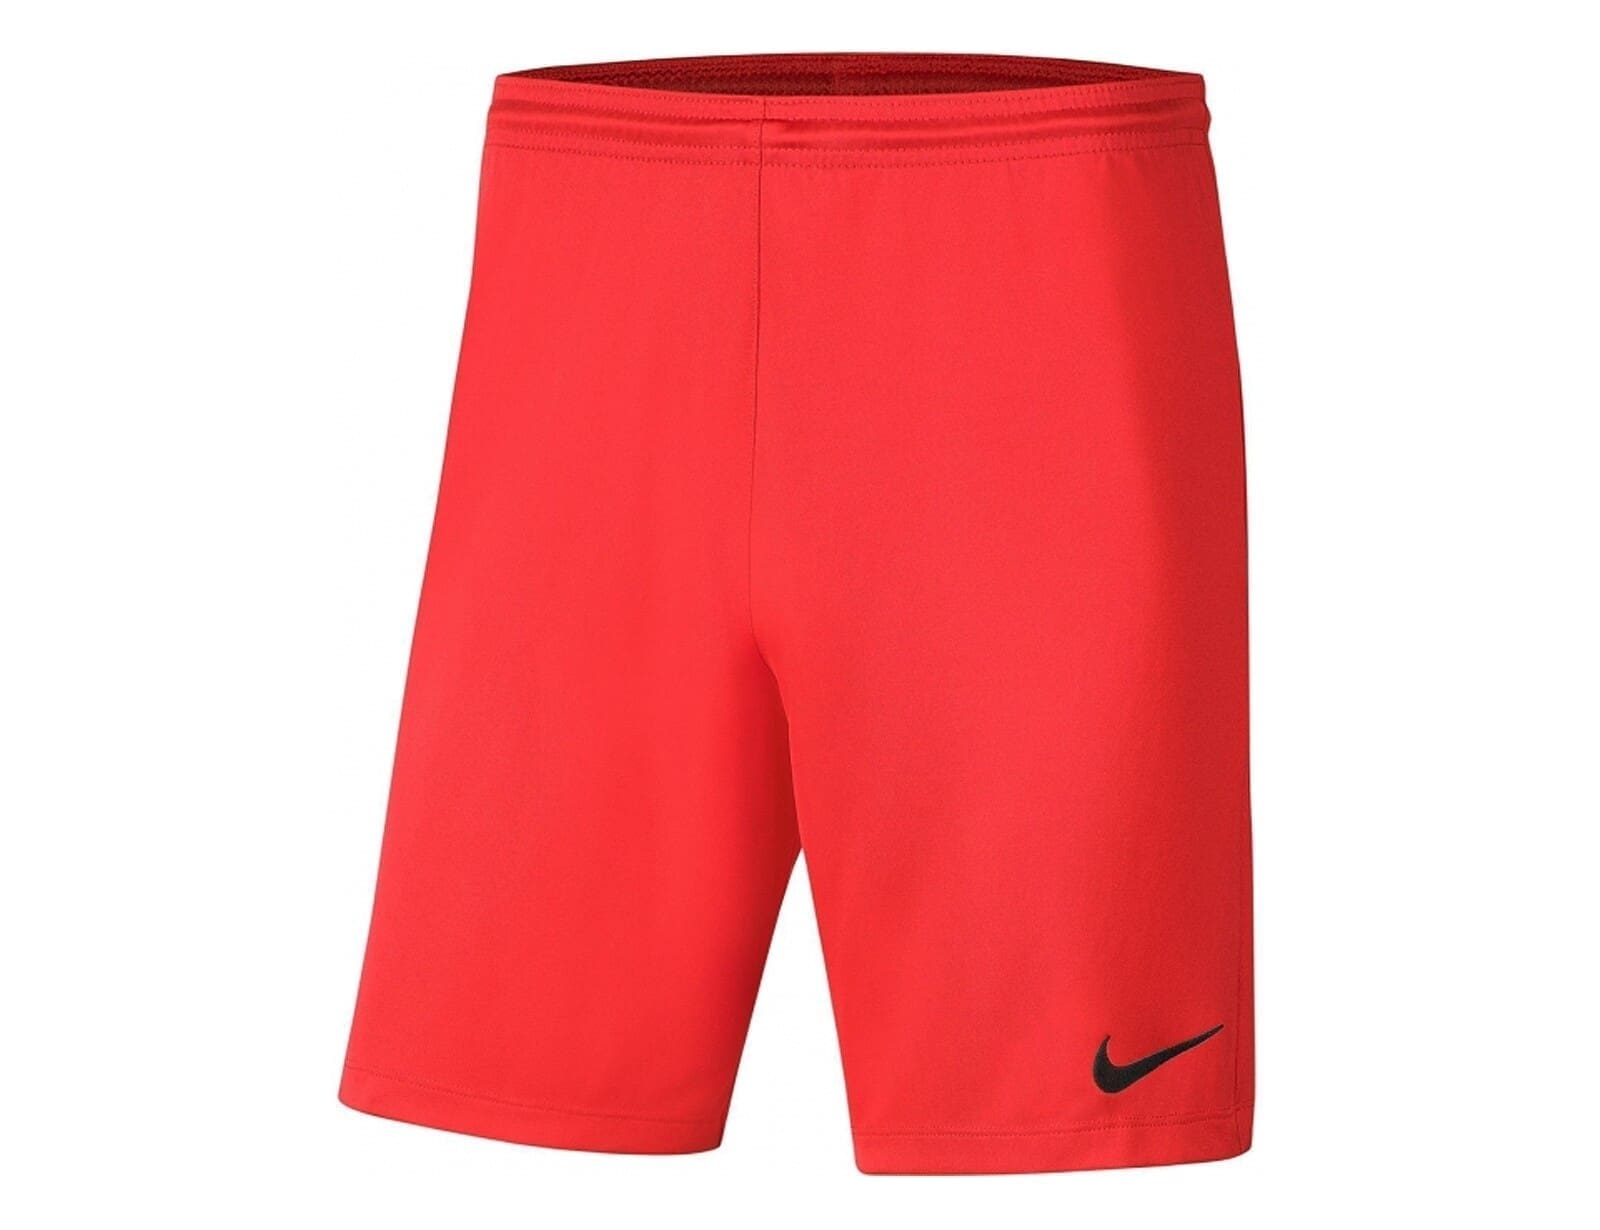 Nike - Park III Knit Short - Rood Voetbalbroekje